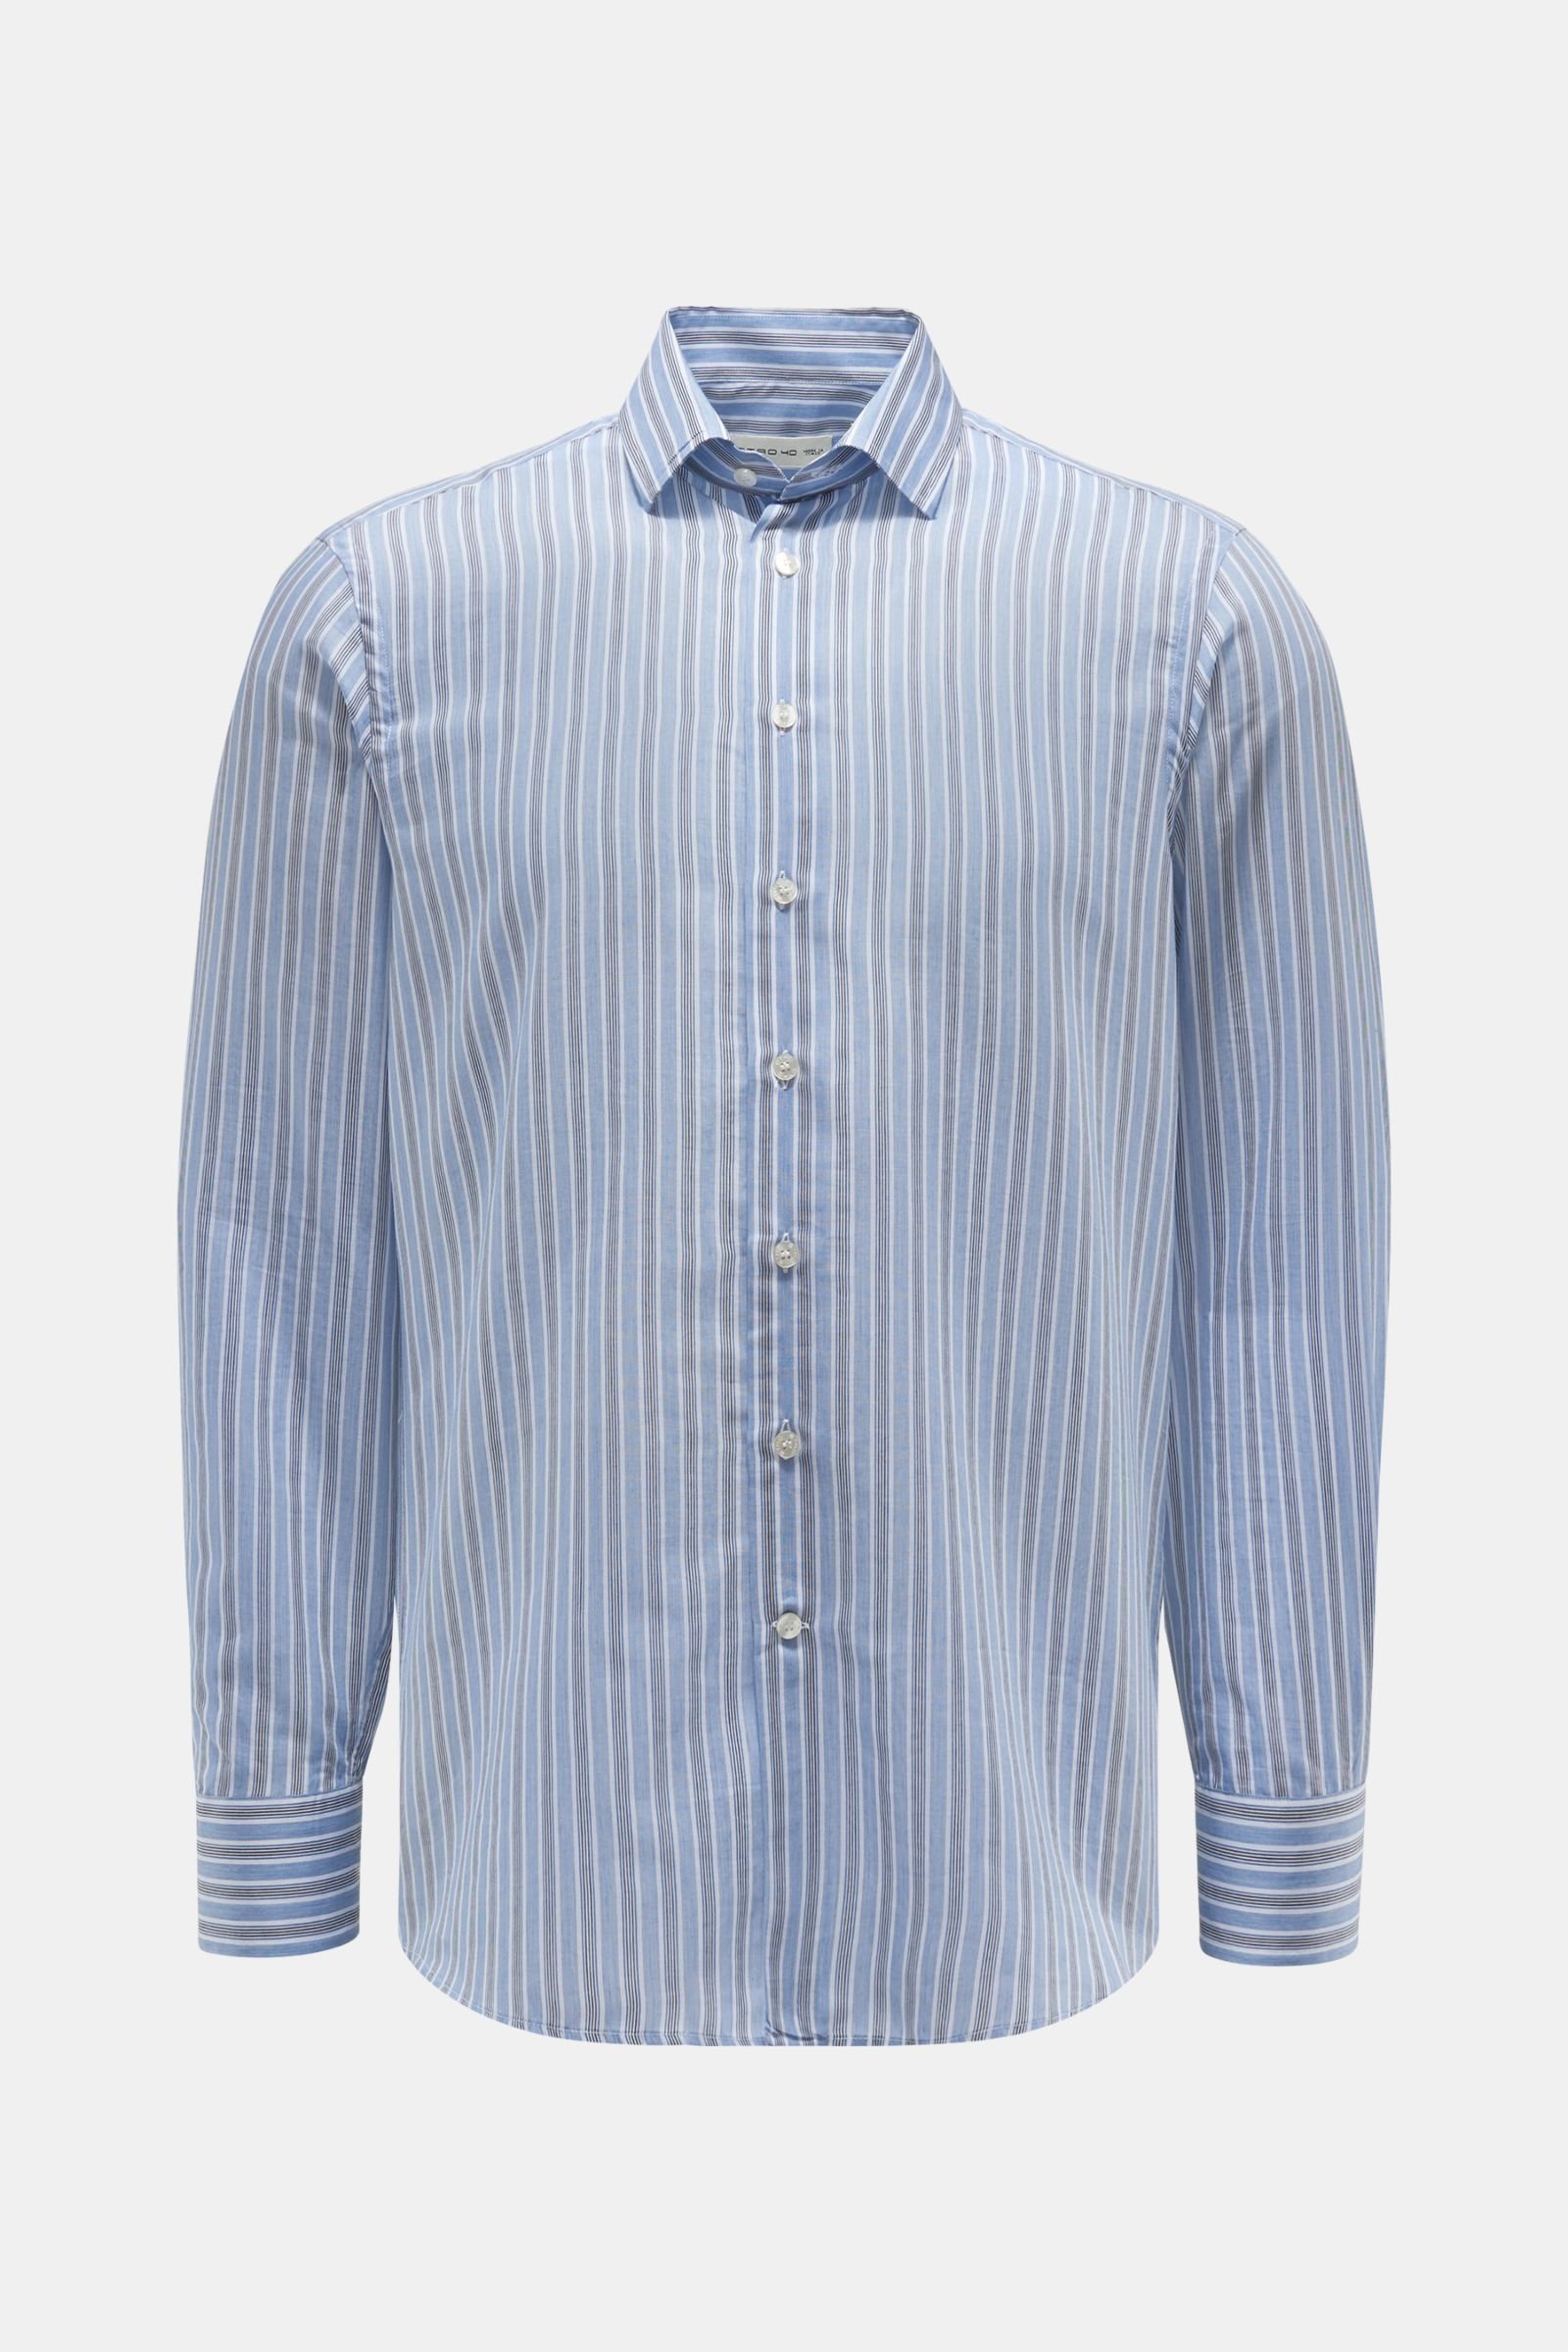 Casual shirt slim collar grey-blue/white striped